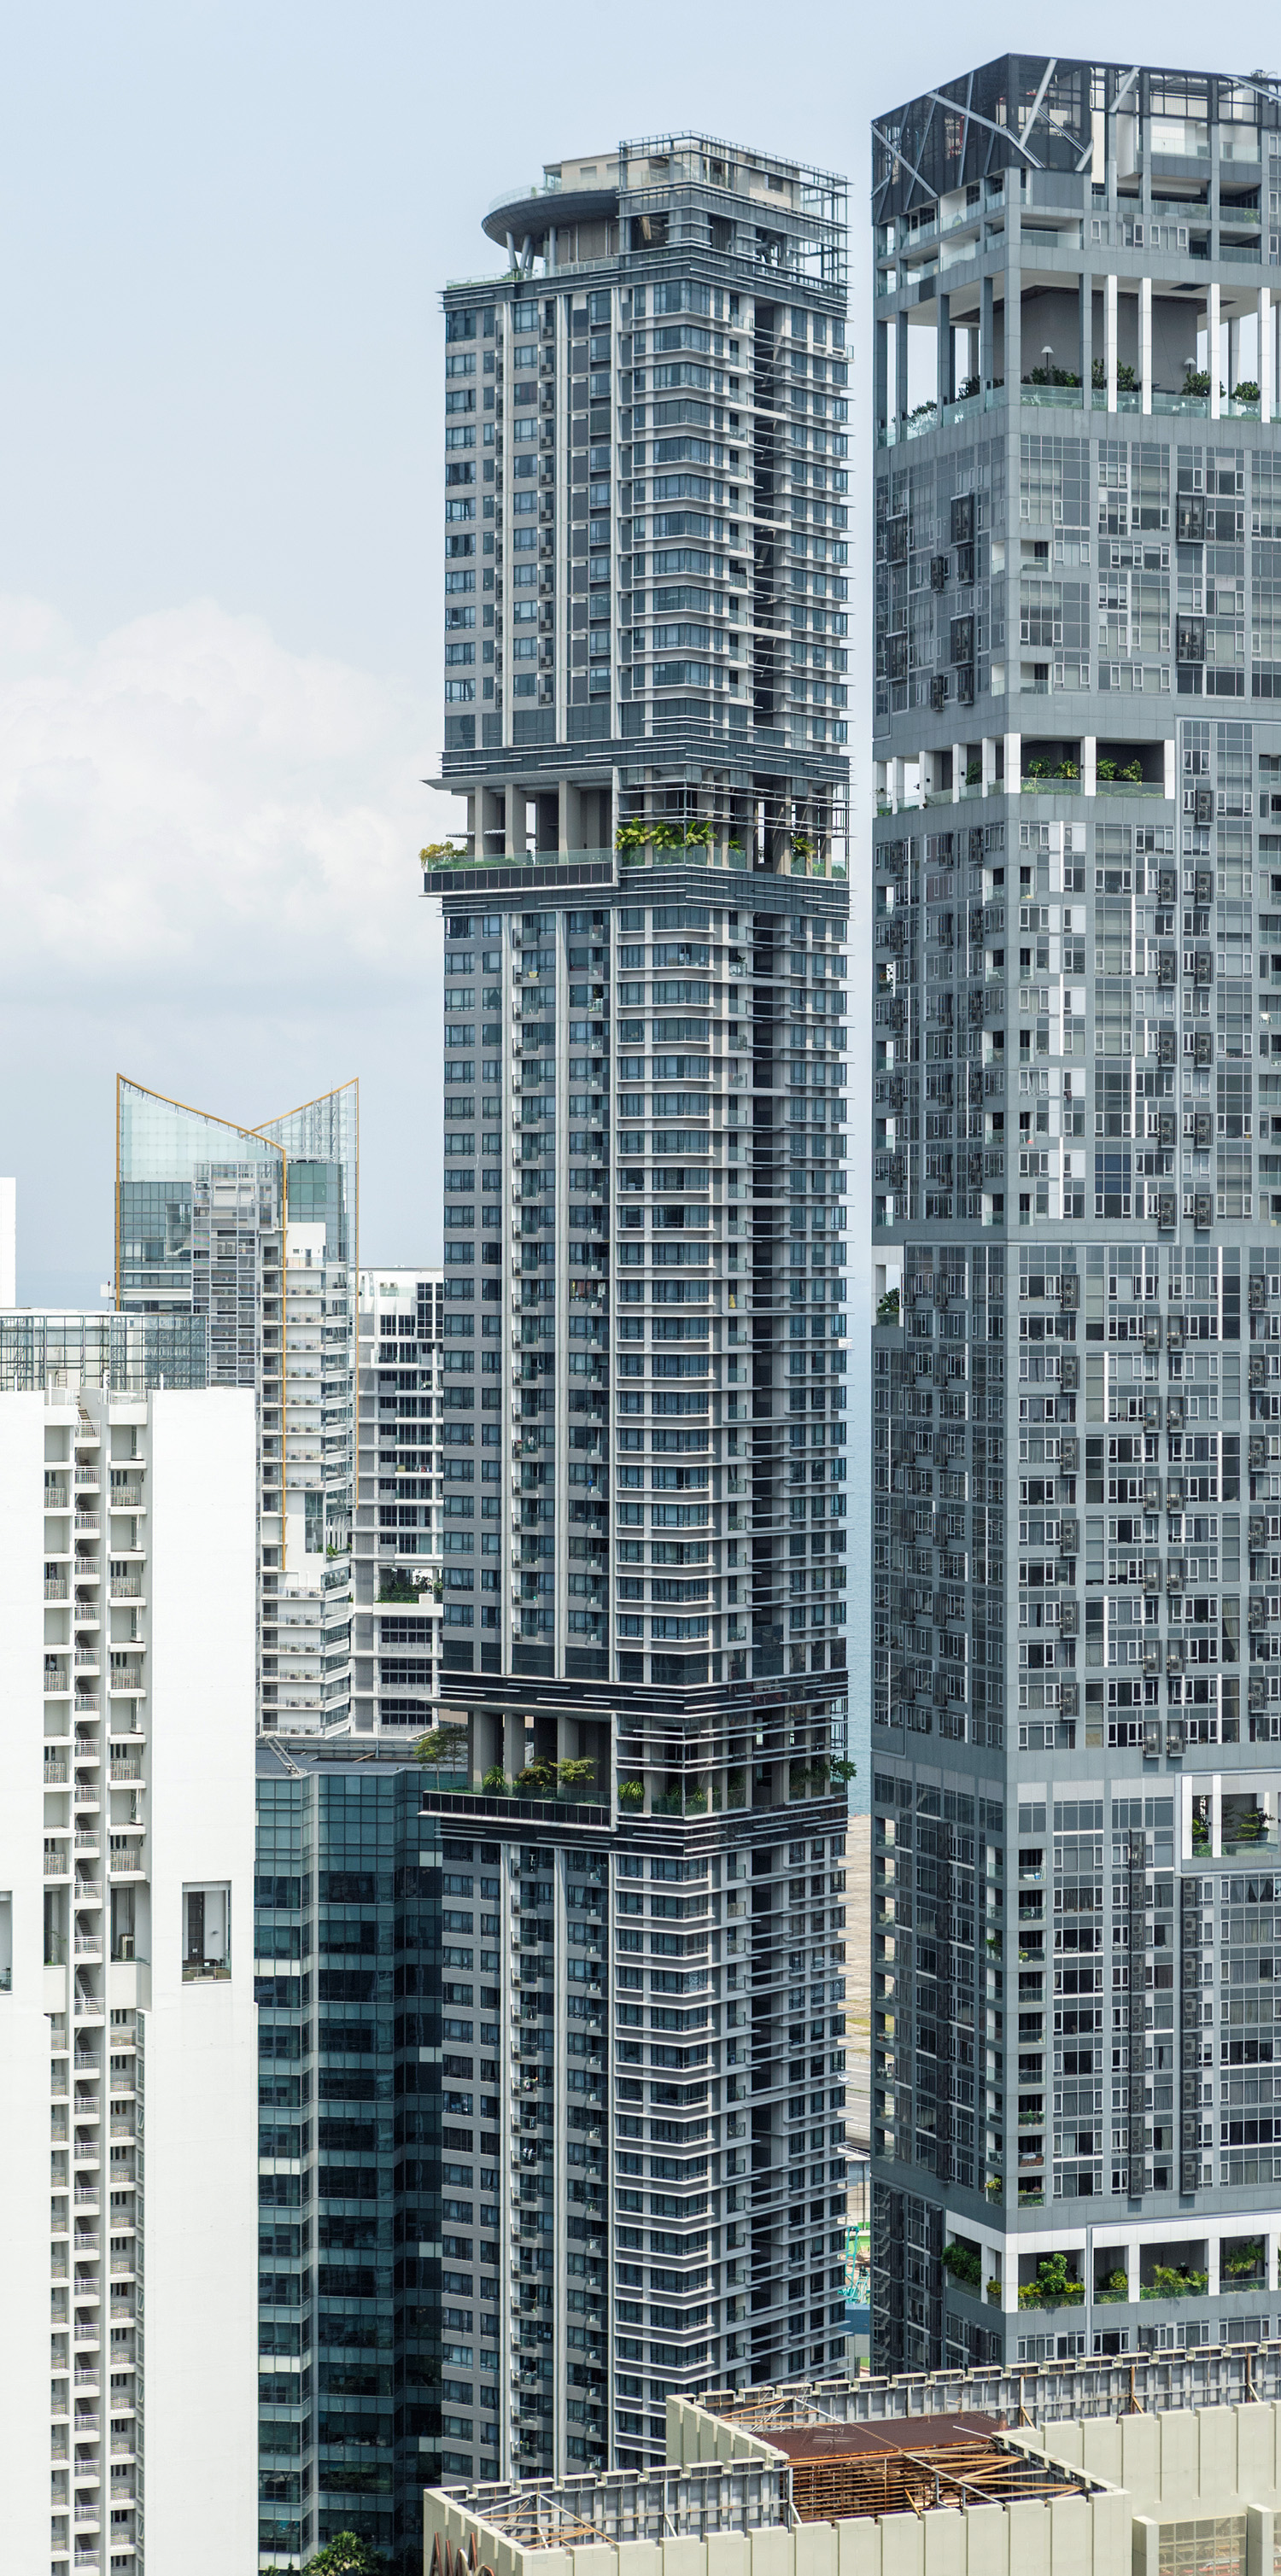 Skysuites @ Anson Enggor Street, Singapore - View from Pinnacle@Duxton. © Mathias Beinling